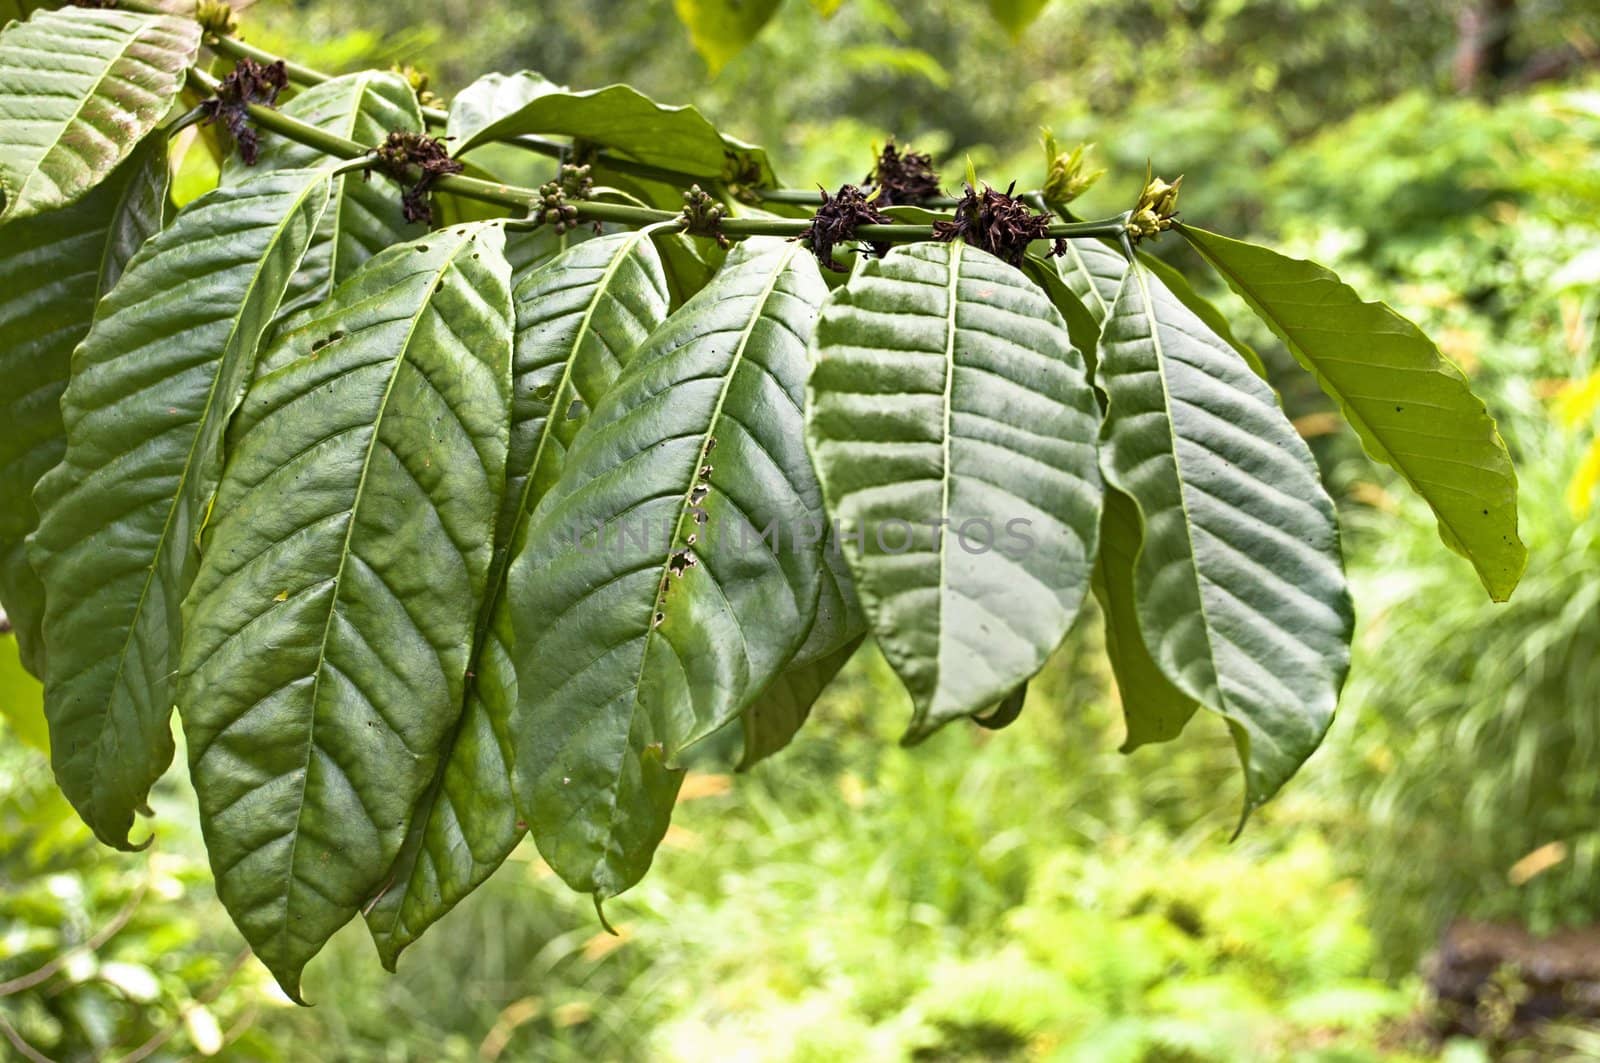 Fresh tobacco leaves by rigamondis